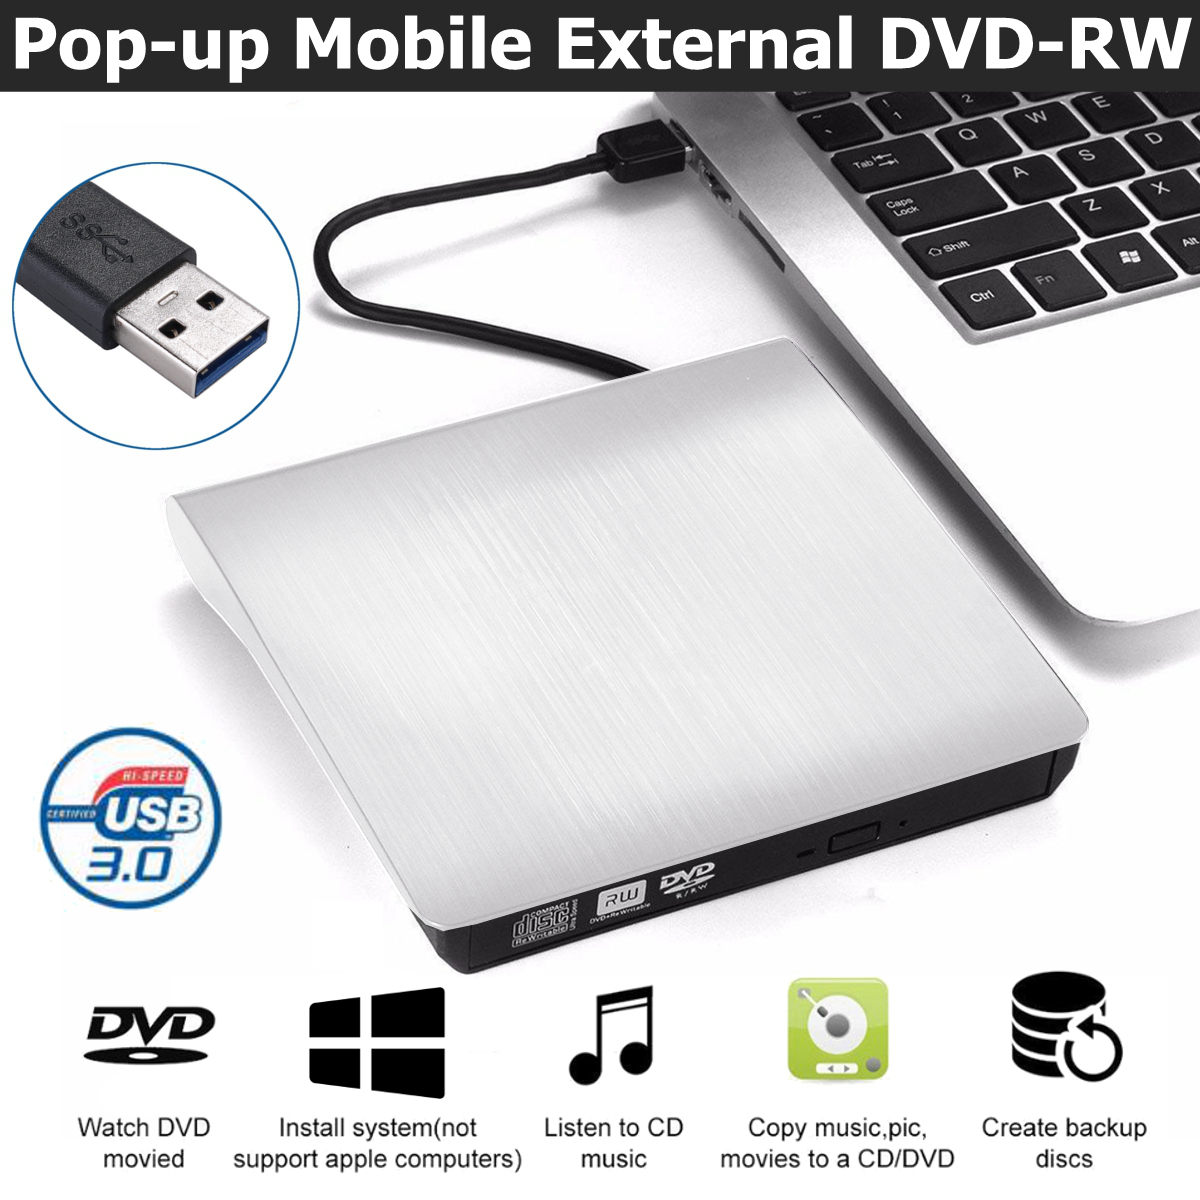 USB-30-Slim-External-DVD-Optical-Drive-DVD-RW-CD-RW-Combo-Drive-Burner-Reader-Player-1564087-6